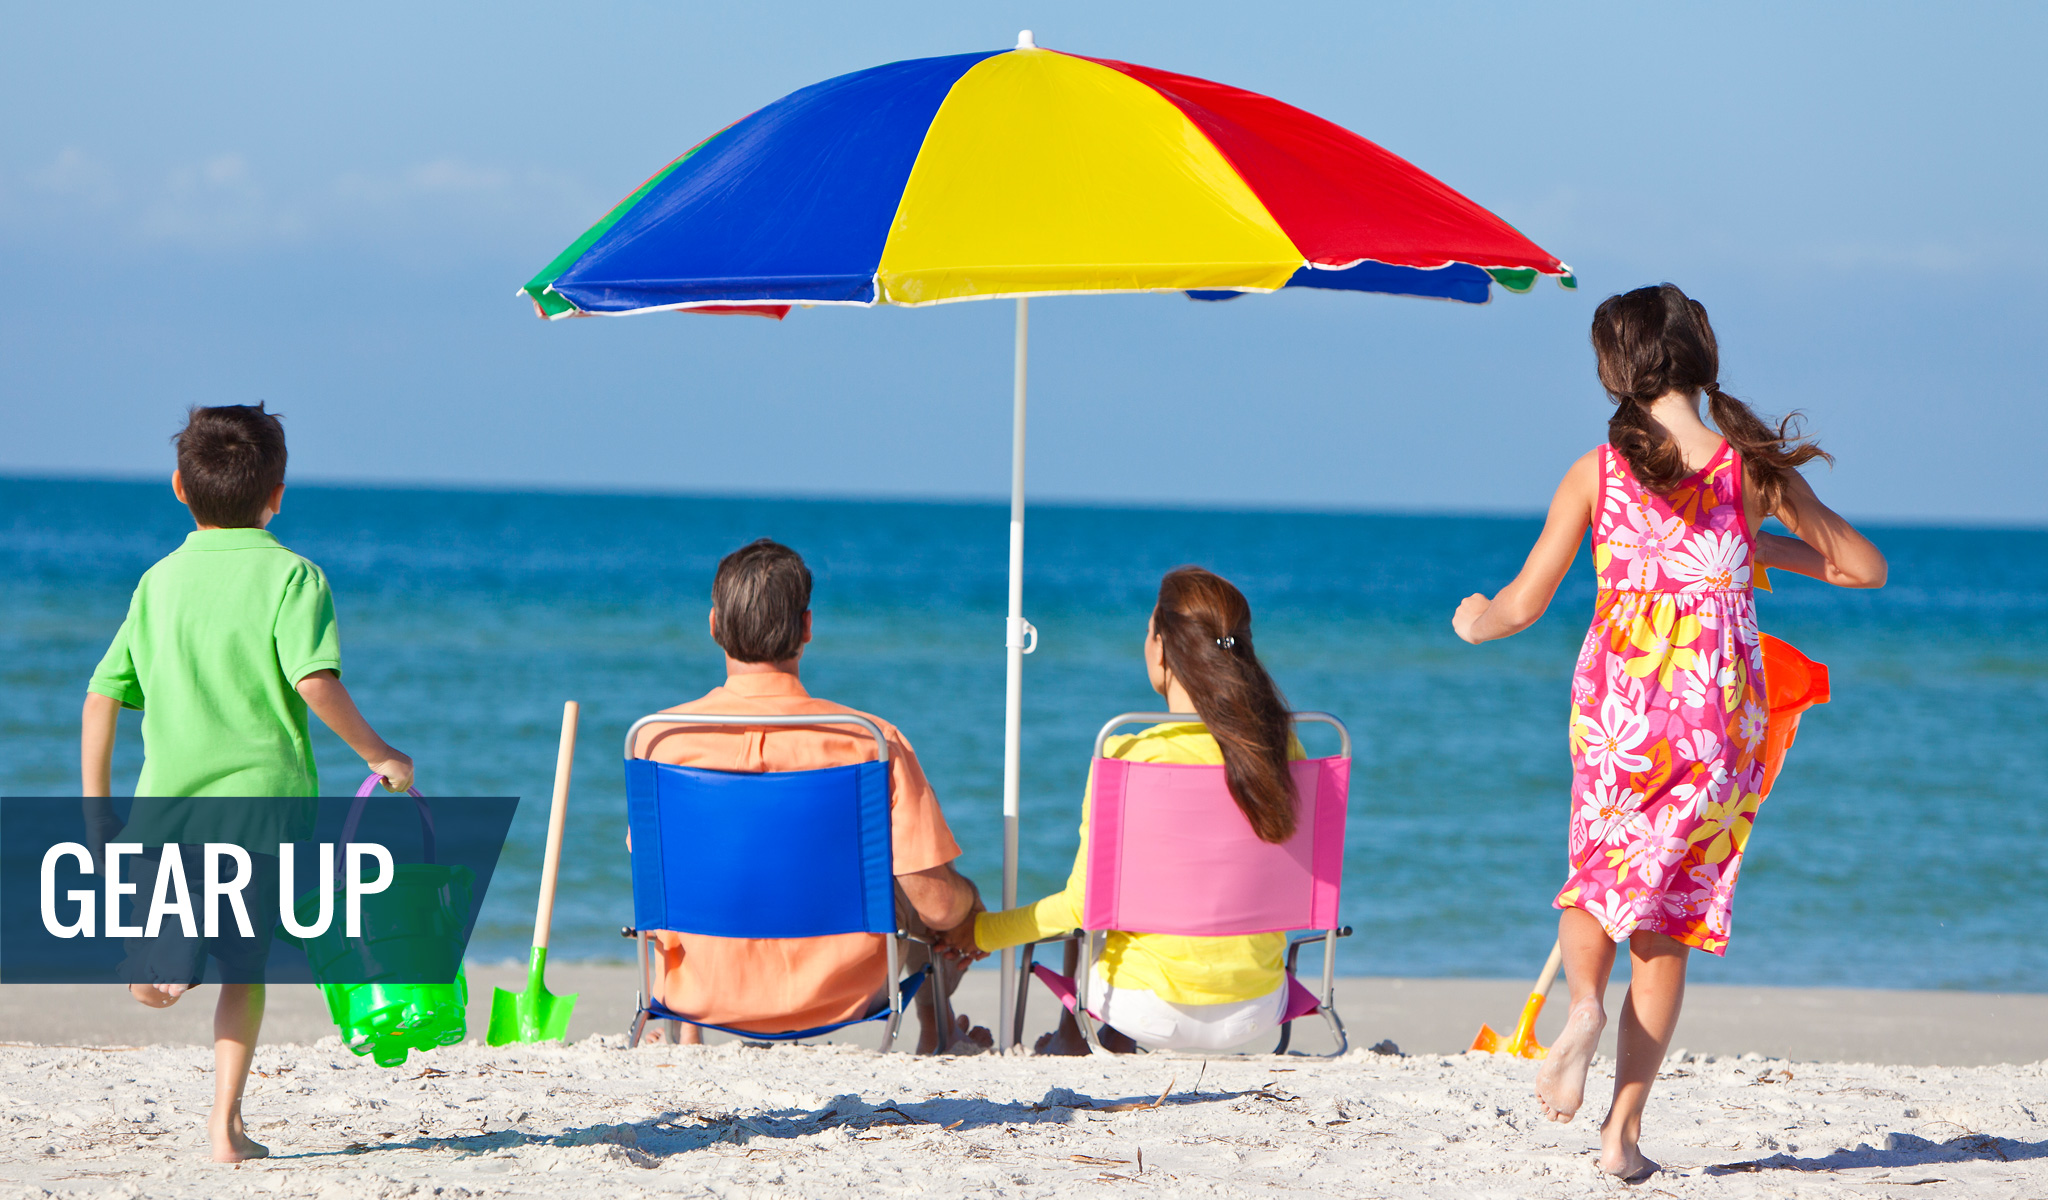 A family with beach rental gear - umbrellas, chairs, beach toys